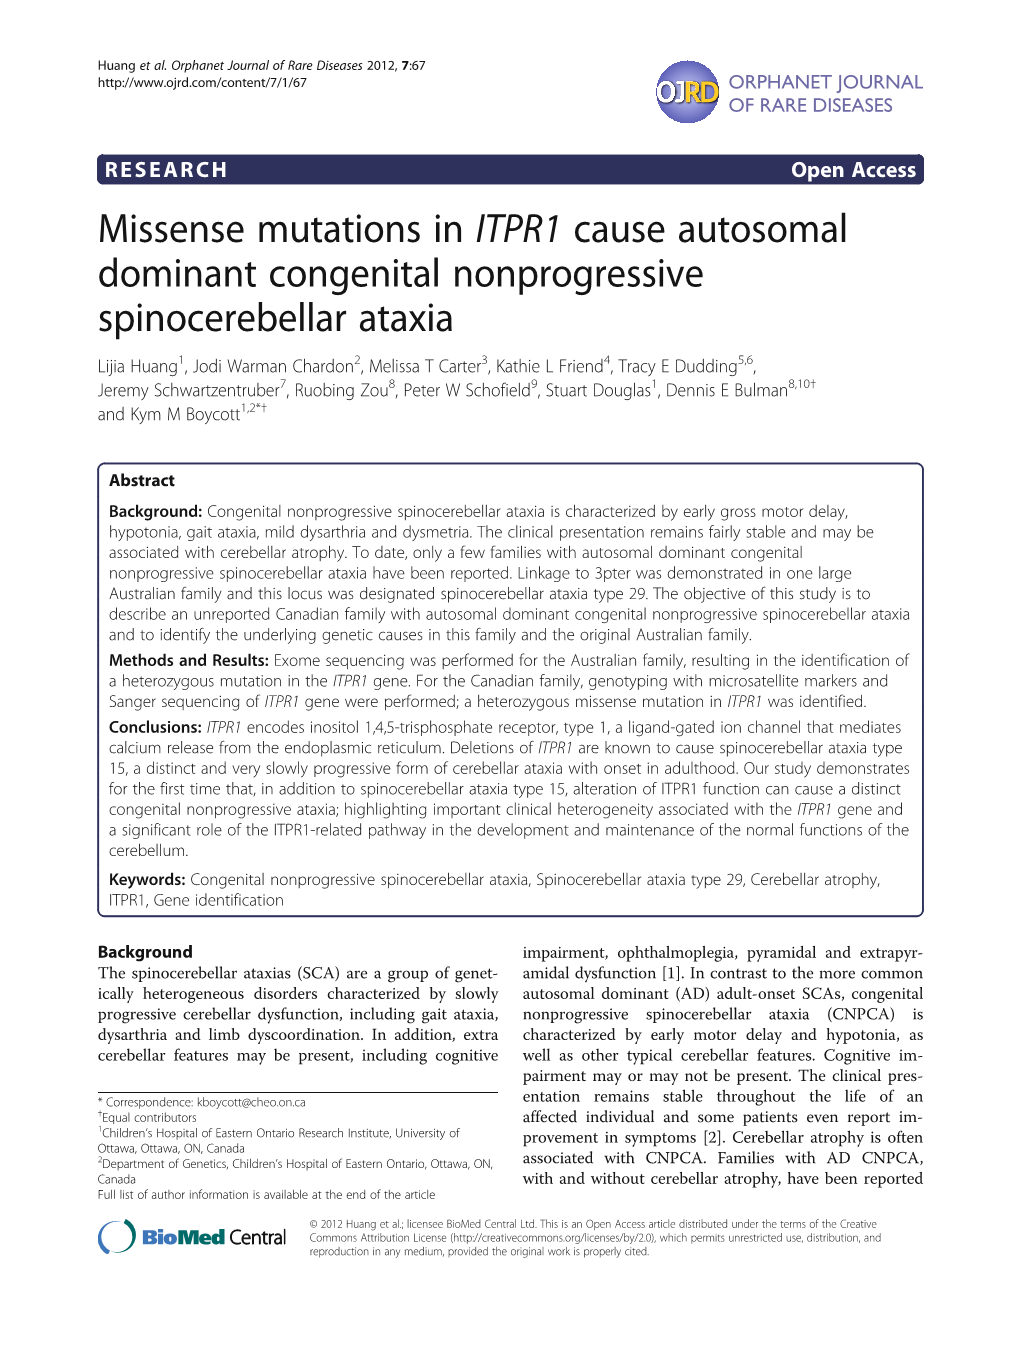 Missense Mutations in ITPR1 Cause Autosomal Dominant Congenital